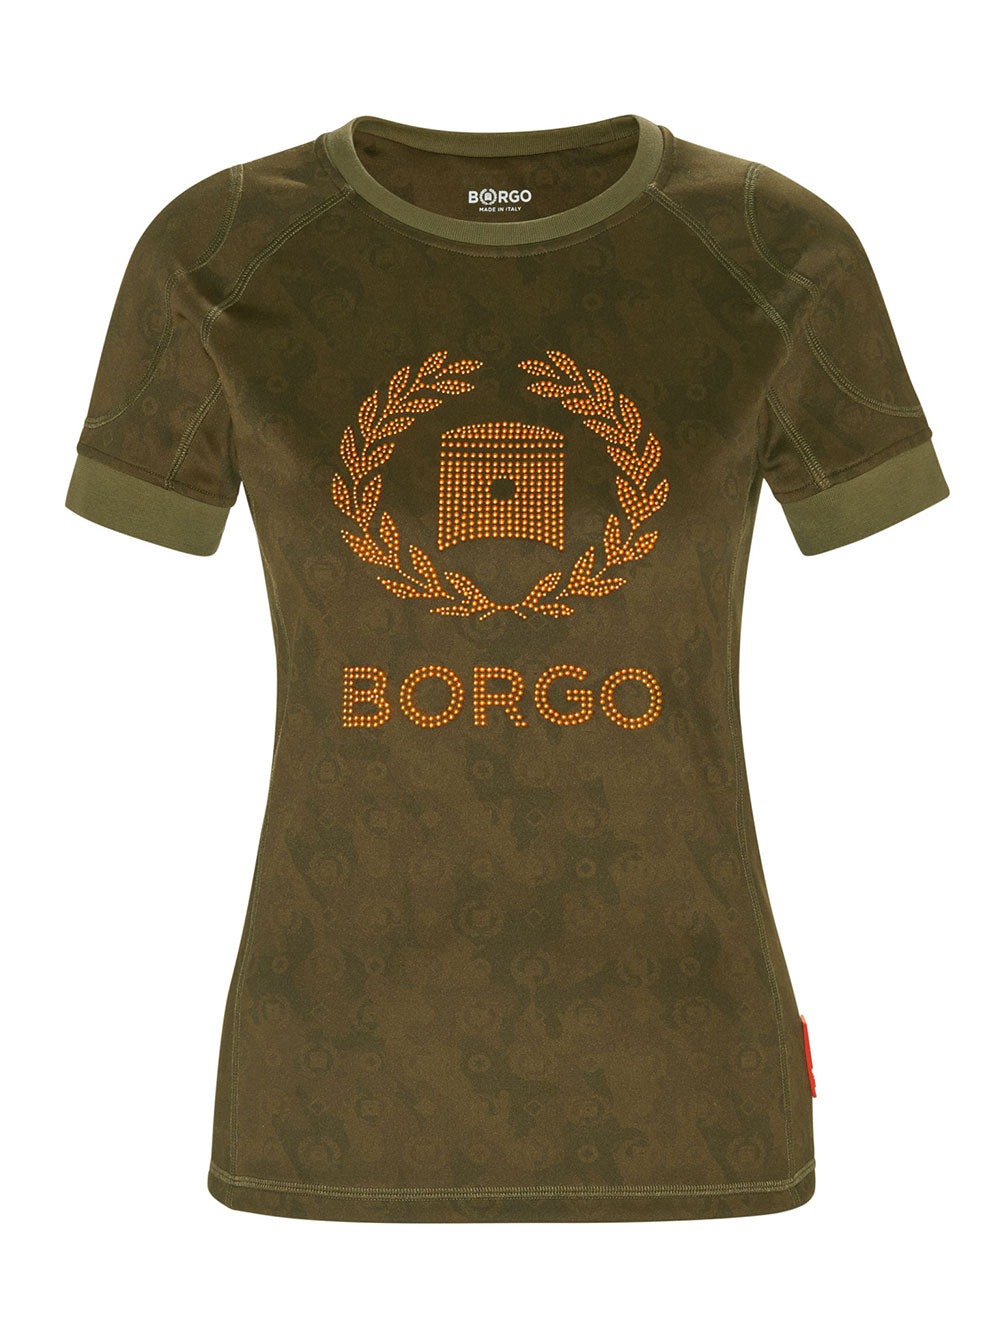 BORGO Andalusia Miura Camo T-Shirt